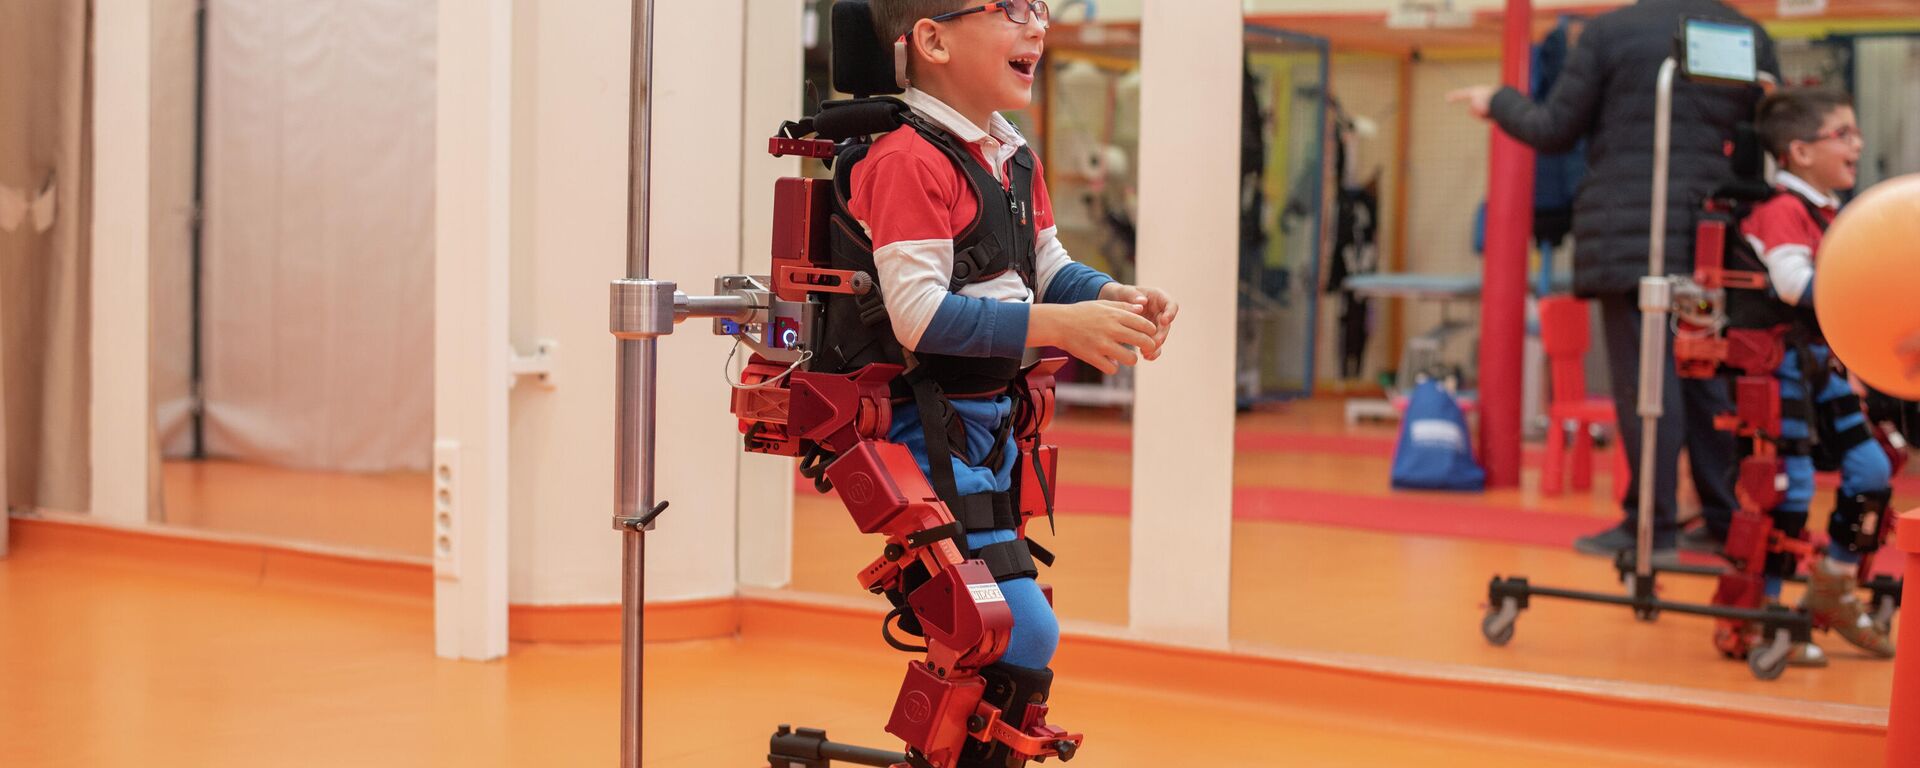 Pedro, niño con parálisis cerebral, probando el exoesqueleto ATLAS 2030 (Guadalajara, España) - Sputnik Mundo, 1920, 03.12.2021